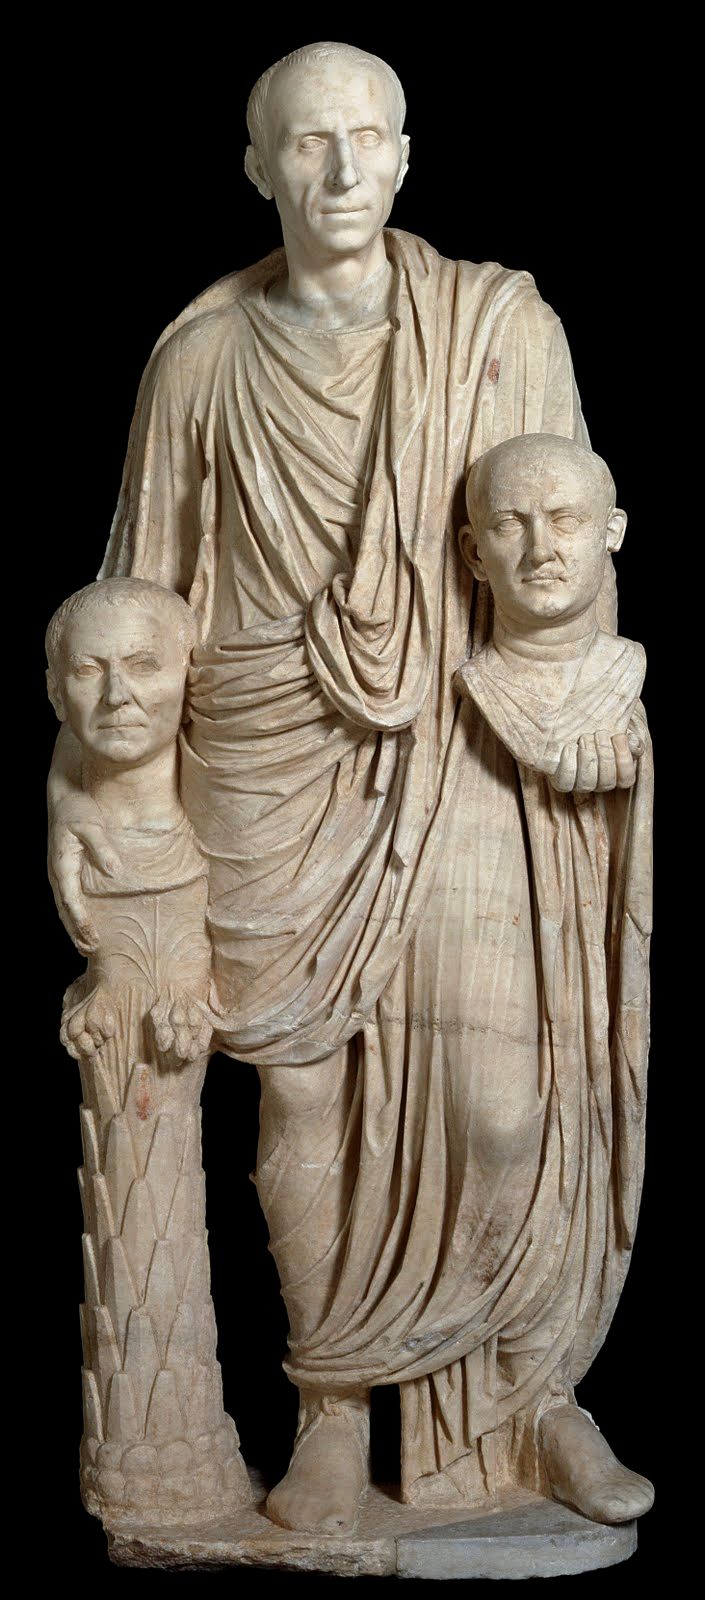 A Roman person wearing a toga, Barberini Collection, I century BCE – Montemartini Museum, Rome IT